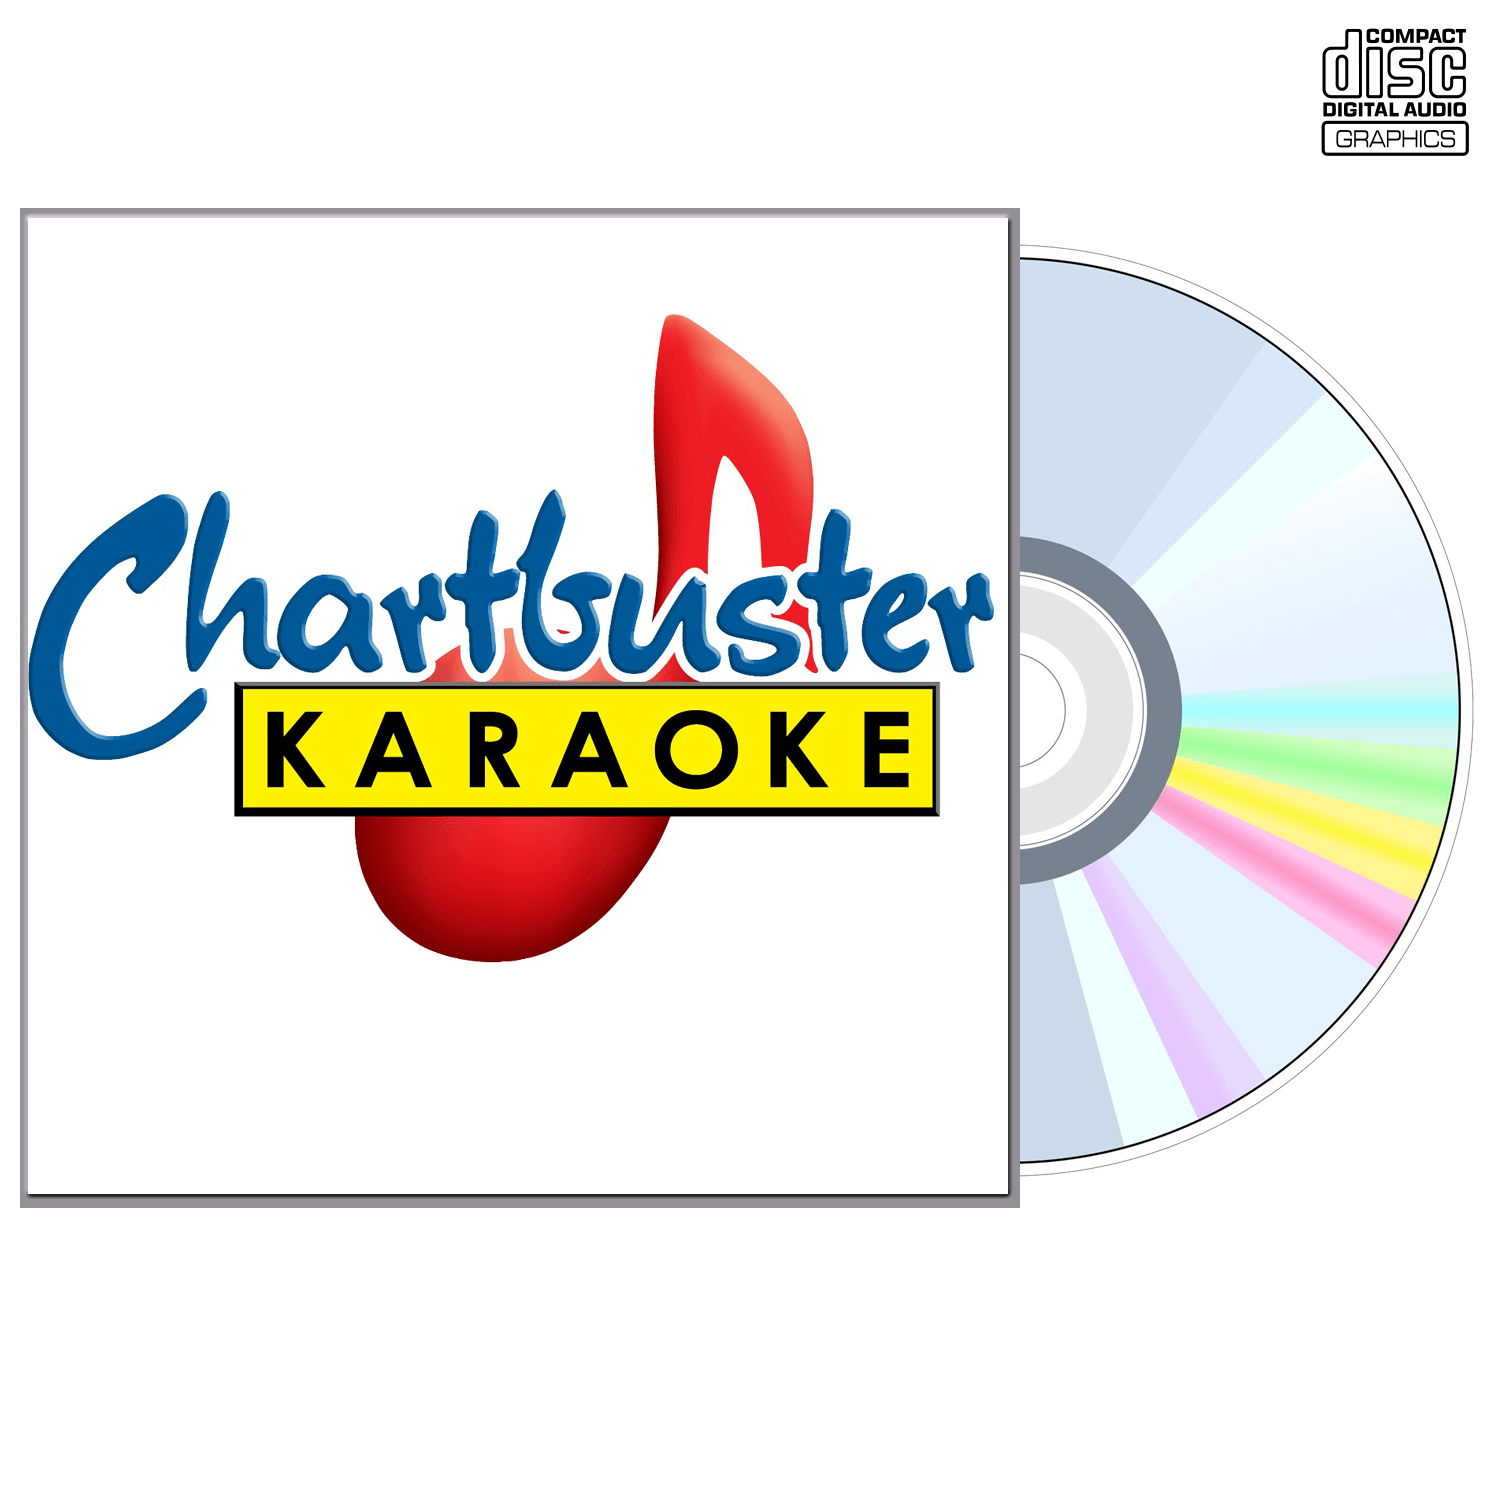 Childrens Songs Vol 3 - CD+G - Chartbuster Karaoke - Karaoke Home Entertainment